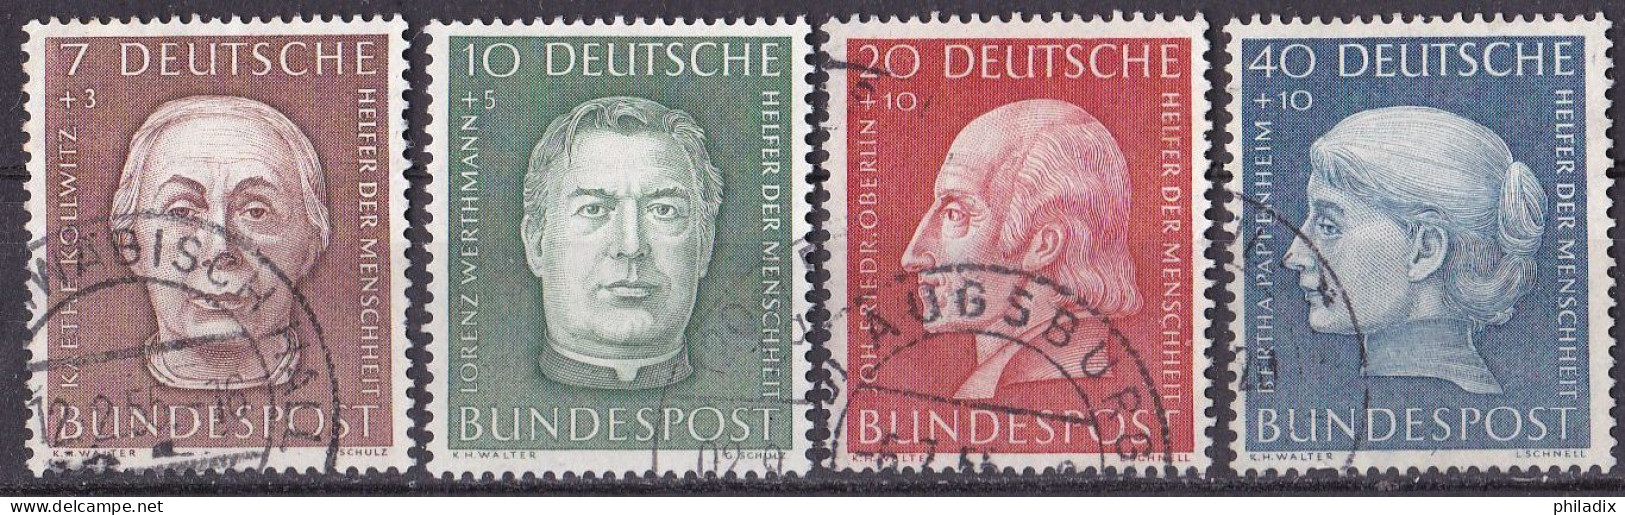 # (200-203) BRD 1954 Wohlfahrt: Helfer Der Menschheit (V) O/used (A5-8) - Gebraucht